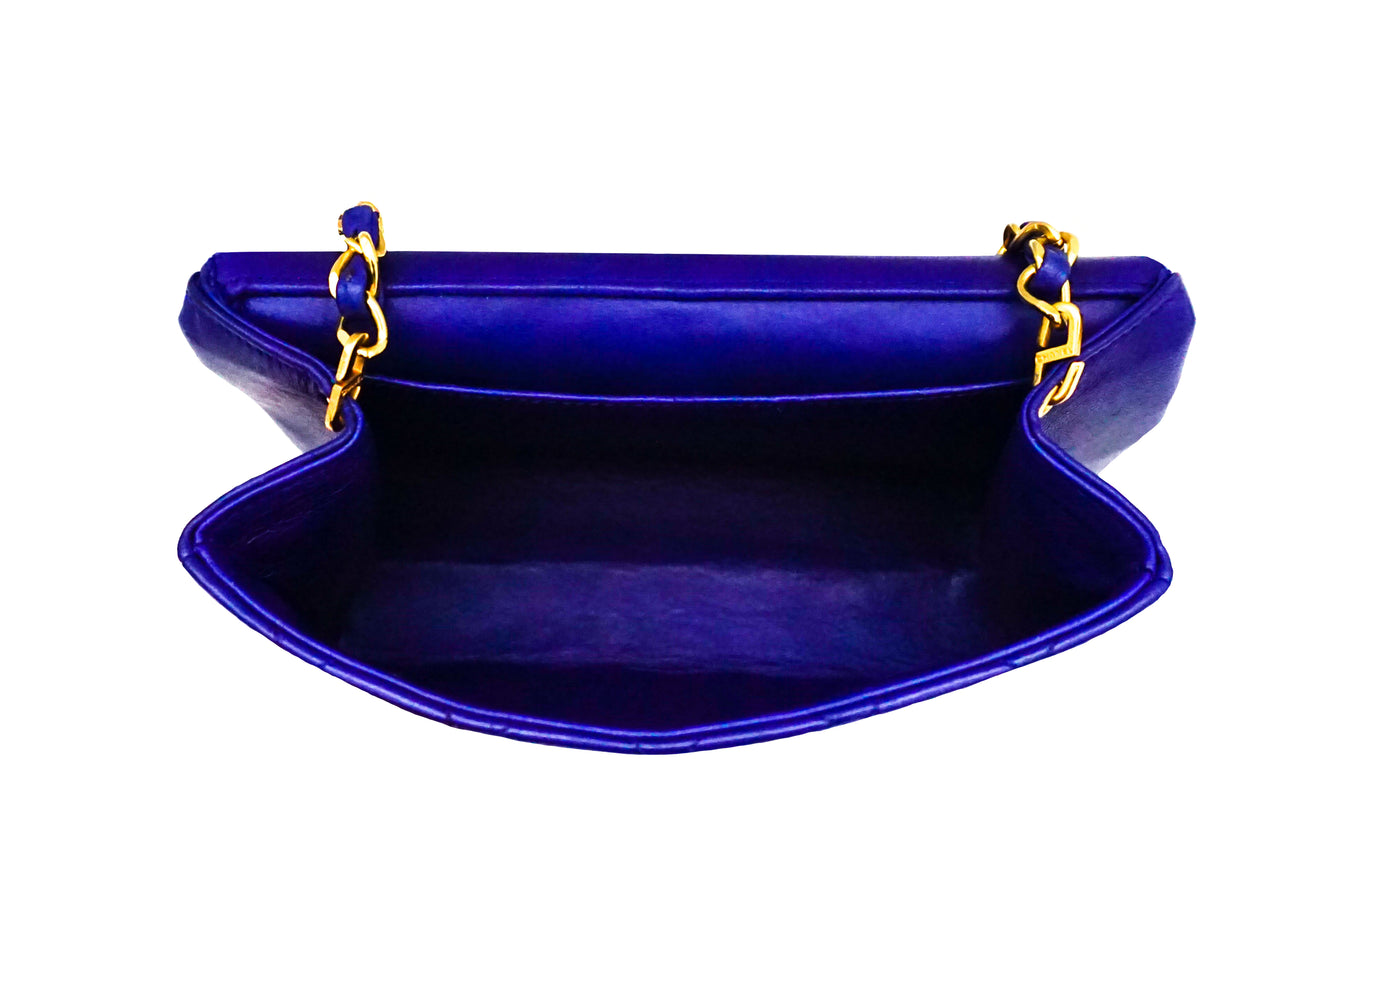 Chanel Vintage Rare Royal Blue Envelope Flap Bag